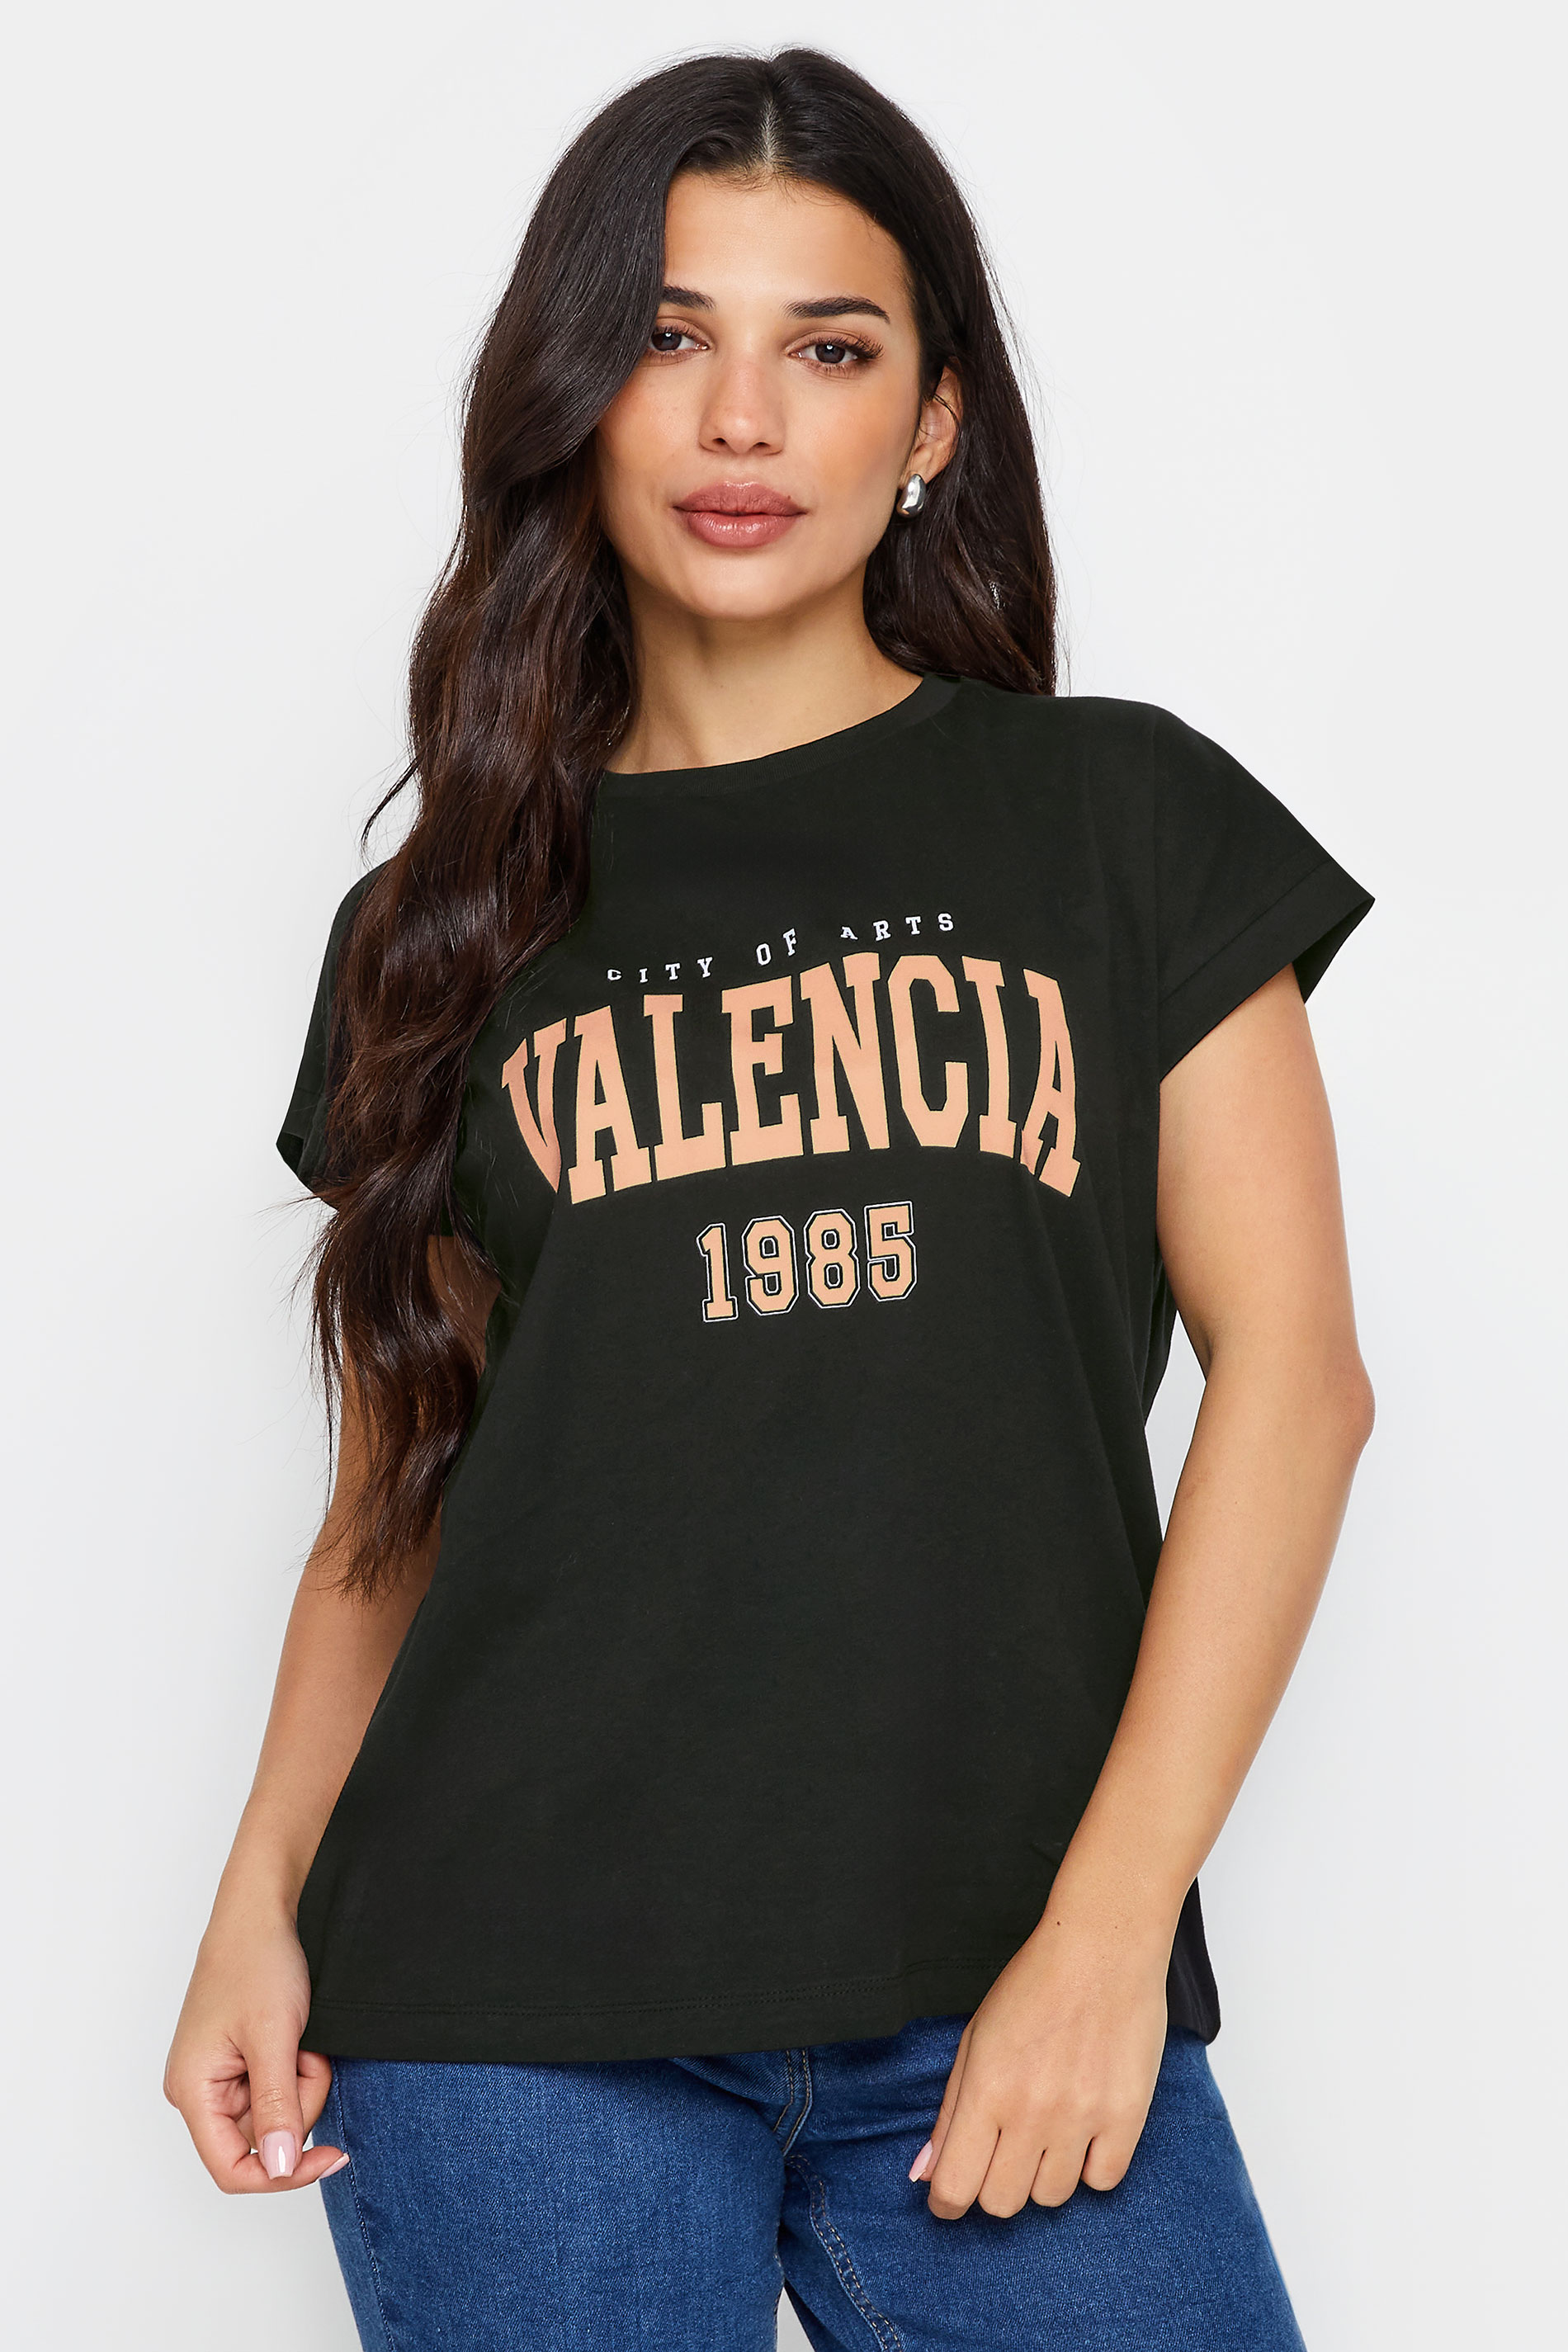 PixieGirl Petite Women's Black 'Valencia' Slogan Short Sleeve T-Shirt | PixieGirl 1